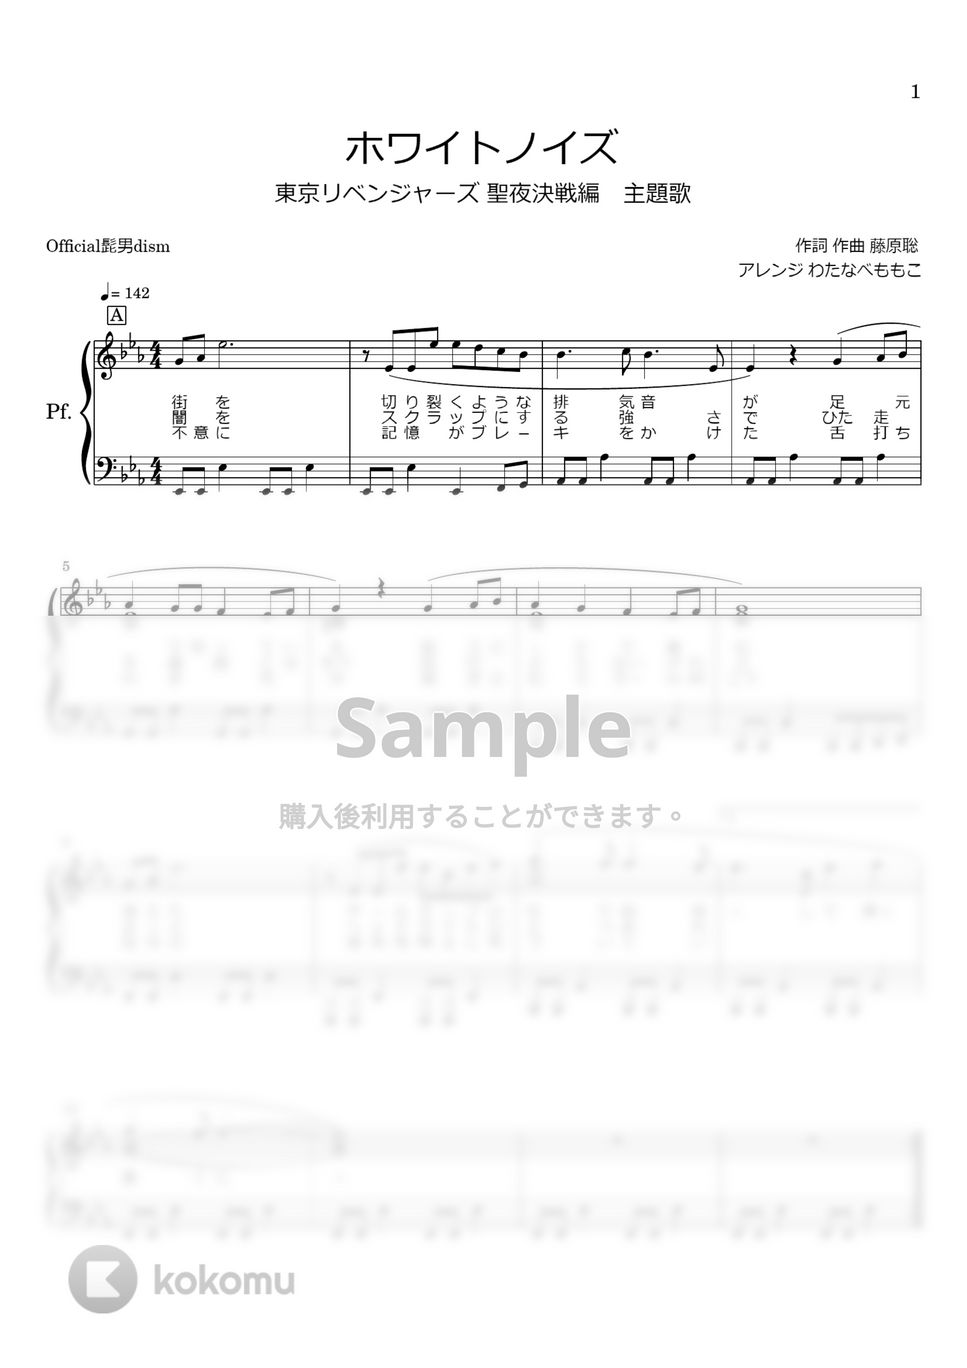 Official髭男dism - ホワイトノイズ by わたなべももこ